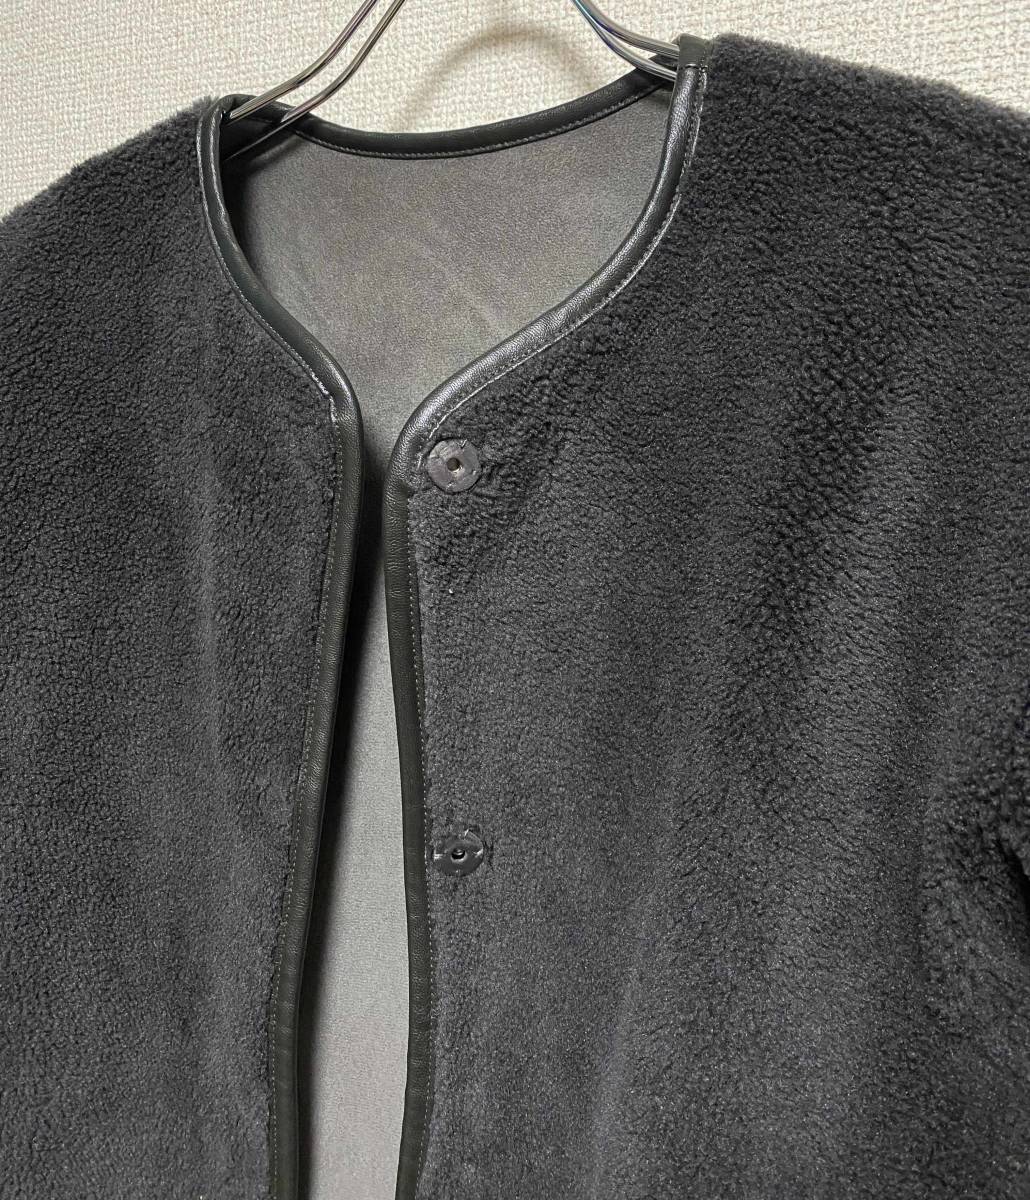  new goods XL * cost koREMIEL lady's reversible boa jacket gray eko mouton Short outer coat no color LL